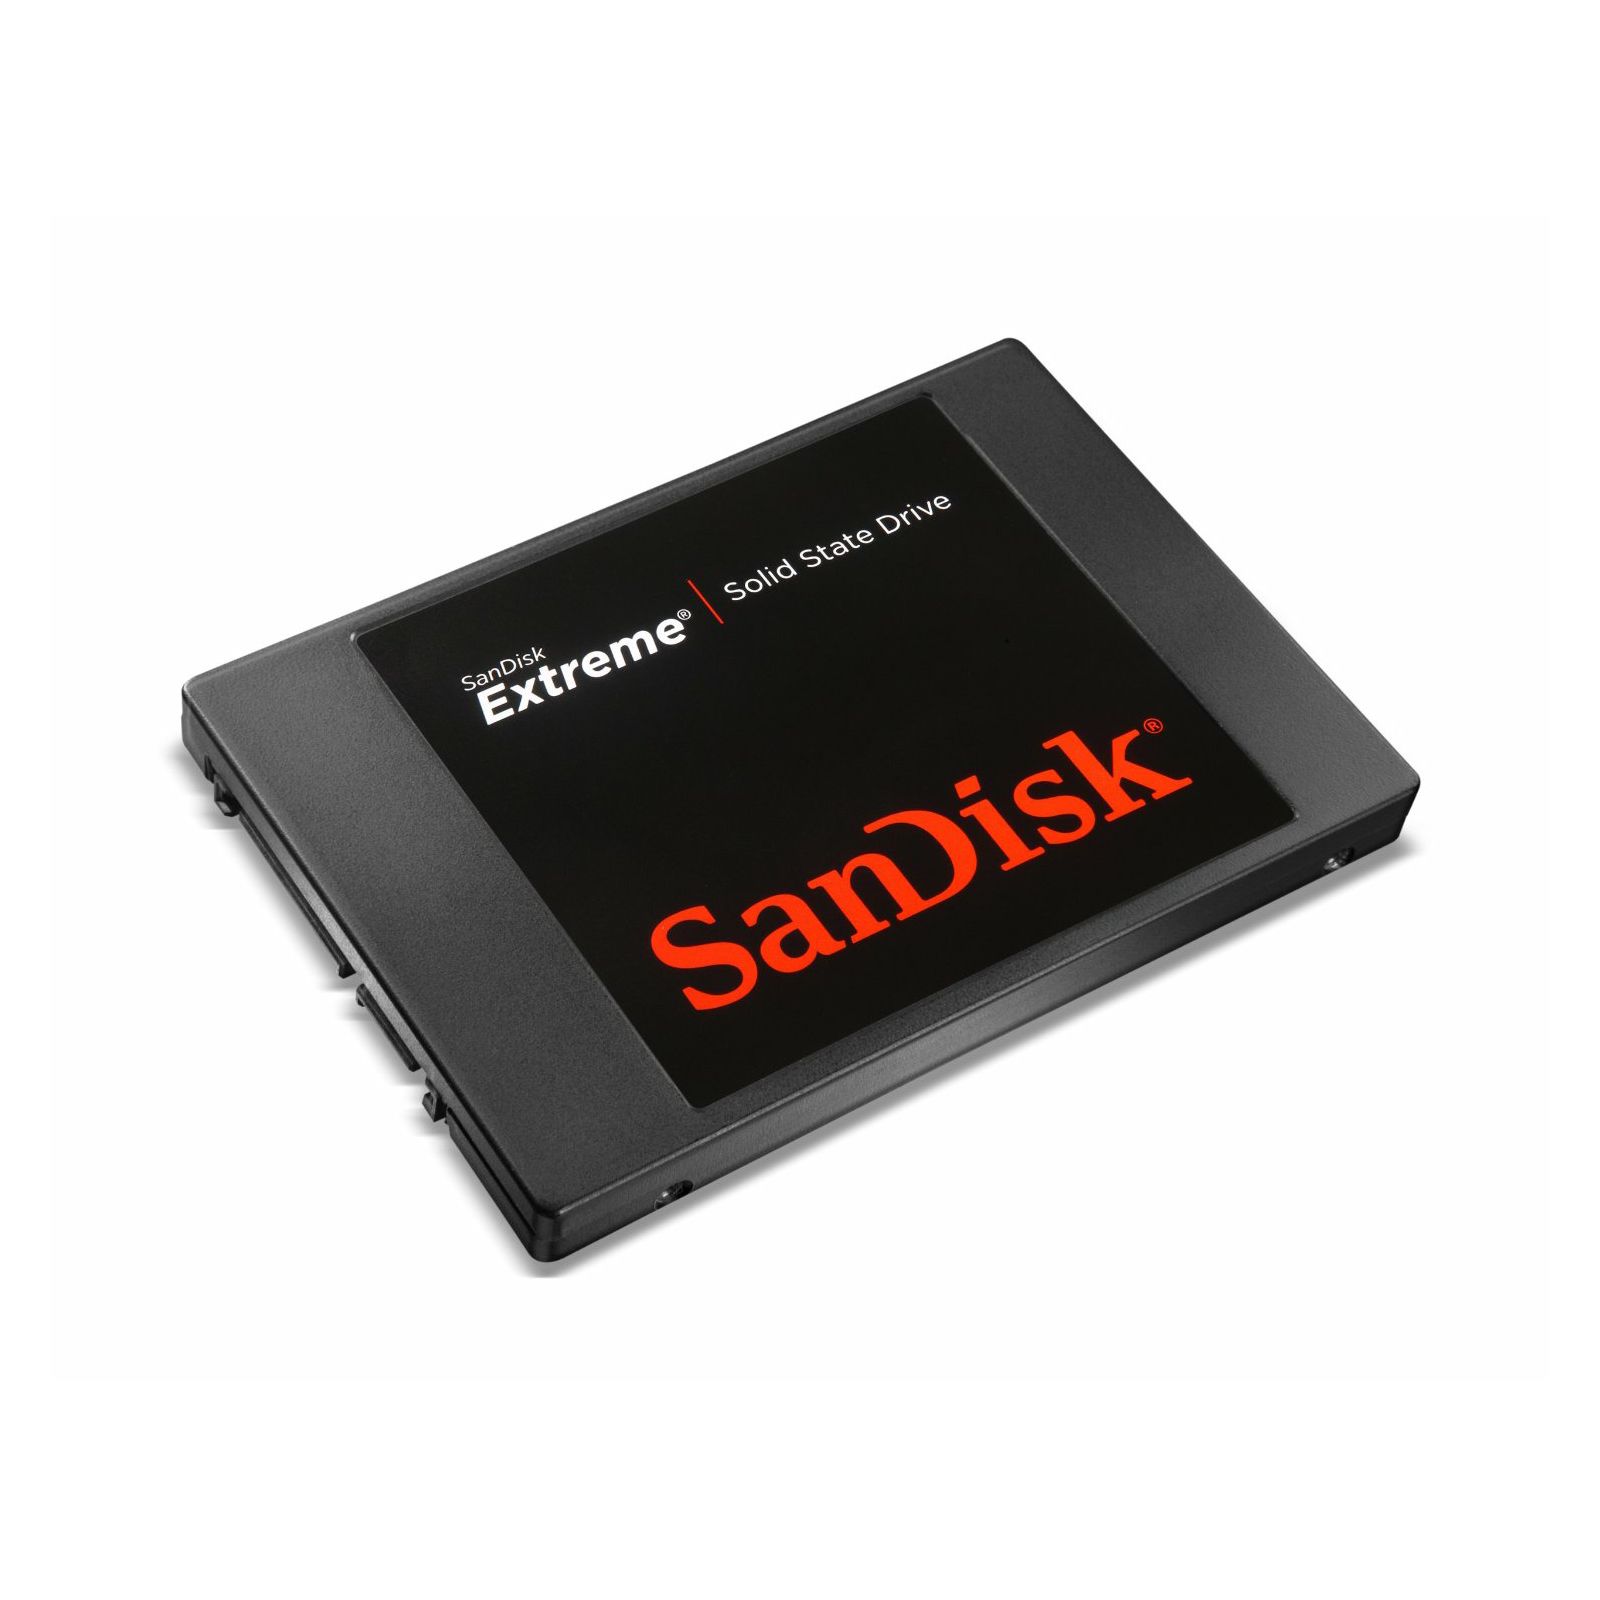 SanDisk SSD Extreme 480GB SDSSDX-480G-G25 Solid State Drive Disk